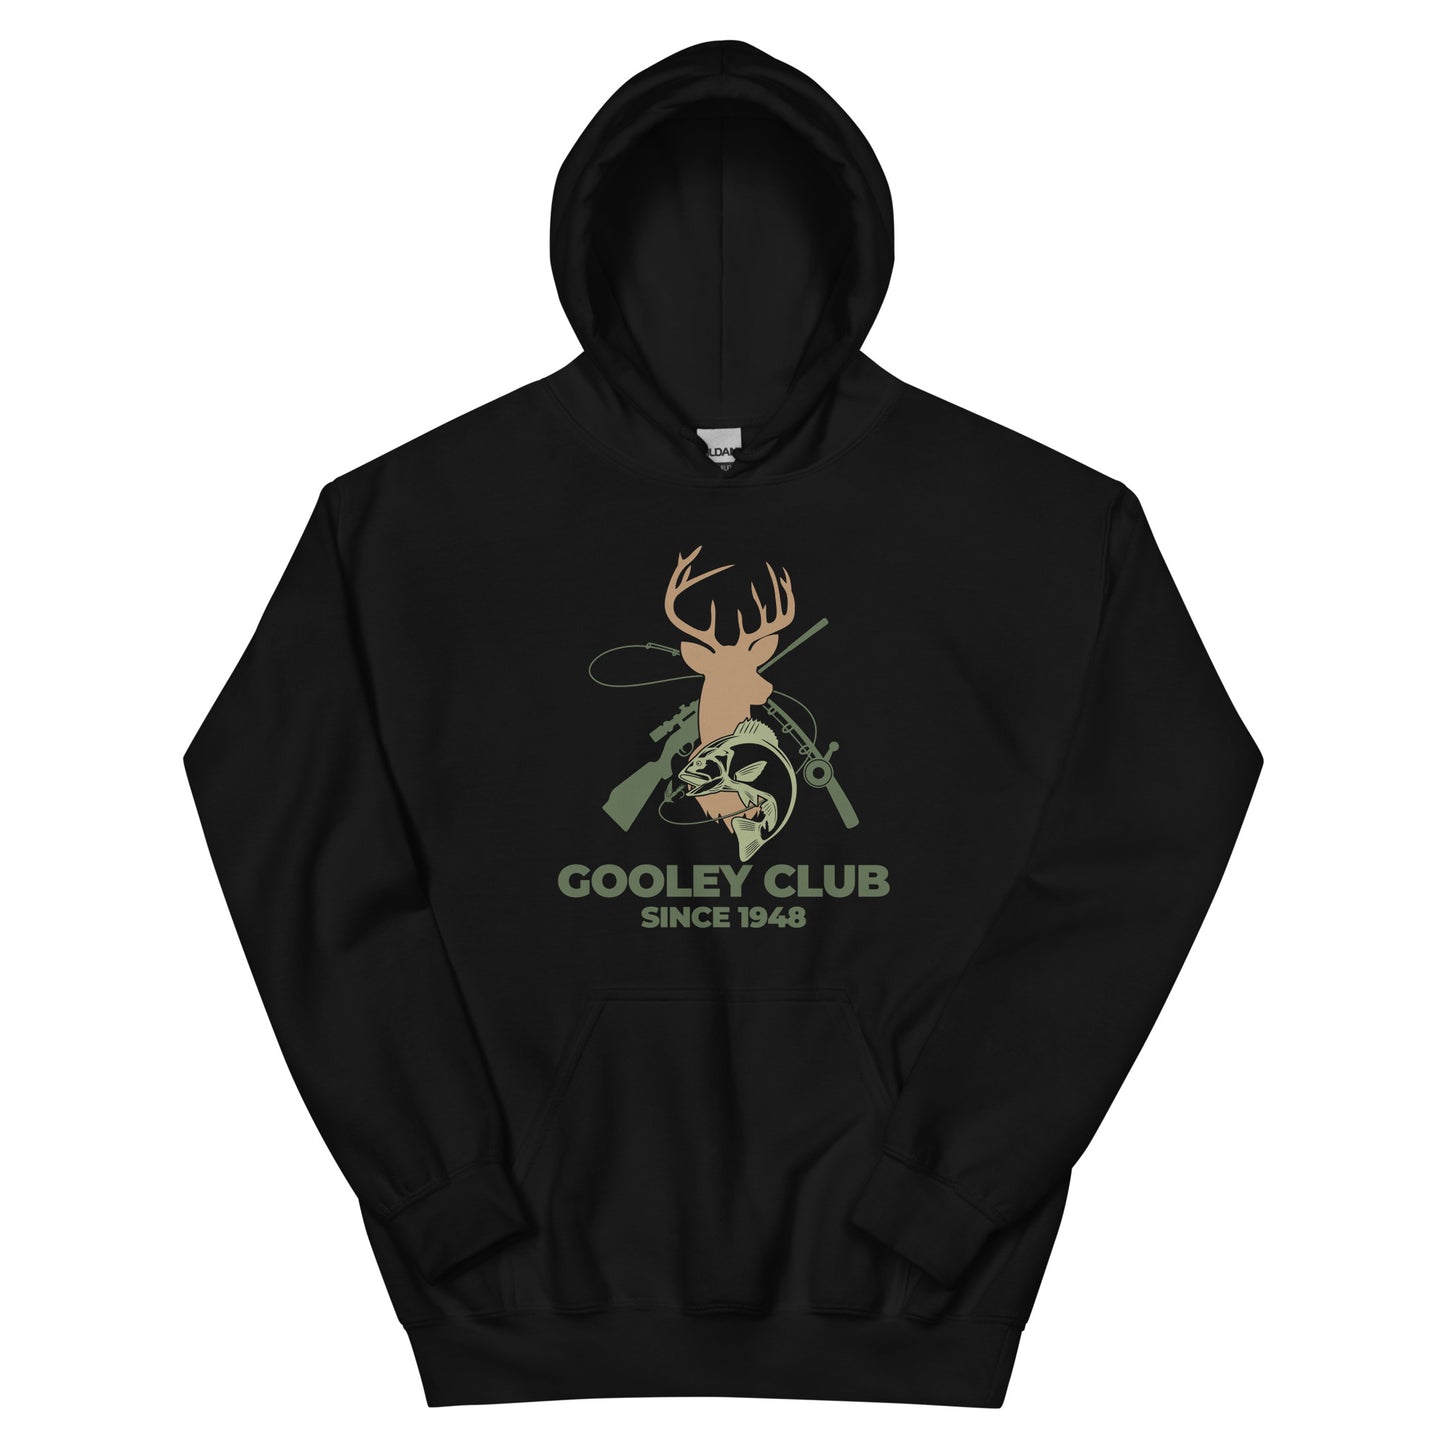 Gooley Club All-Seasons Hoodie